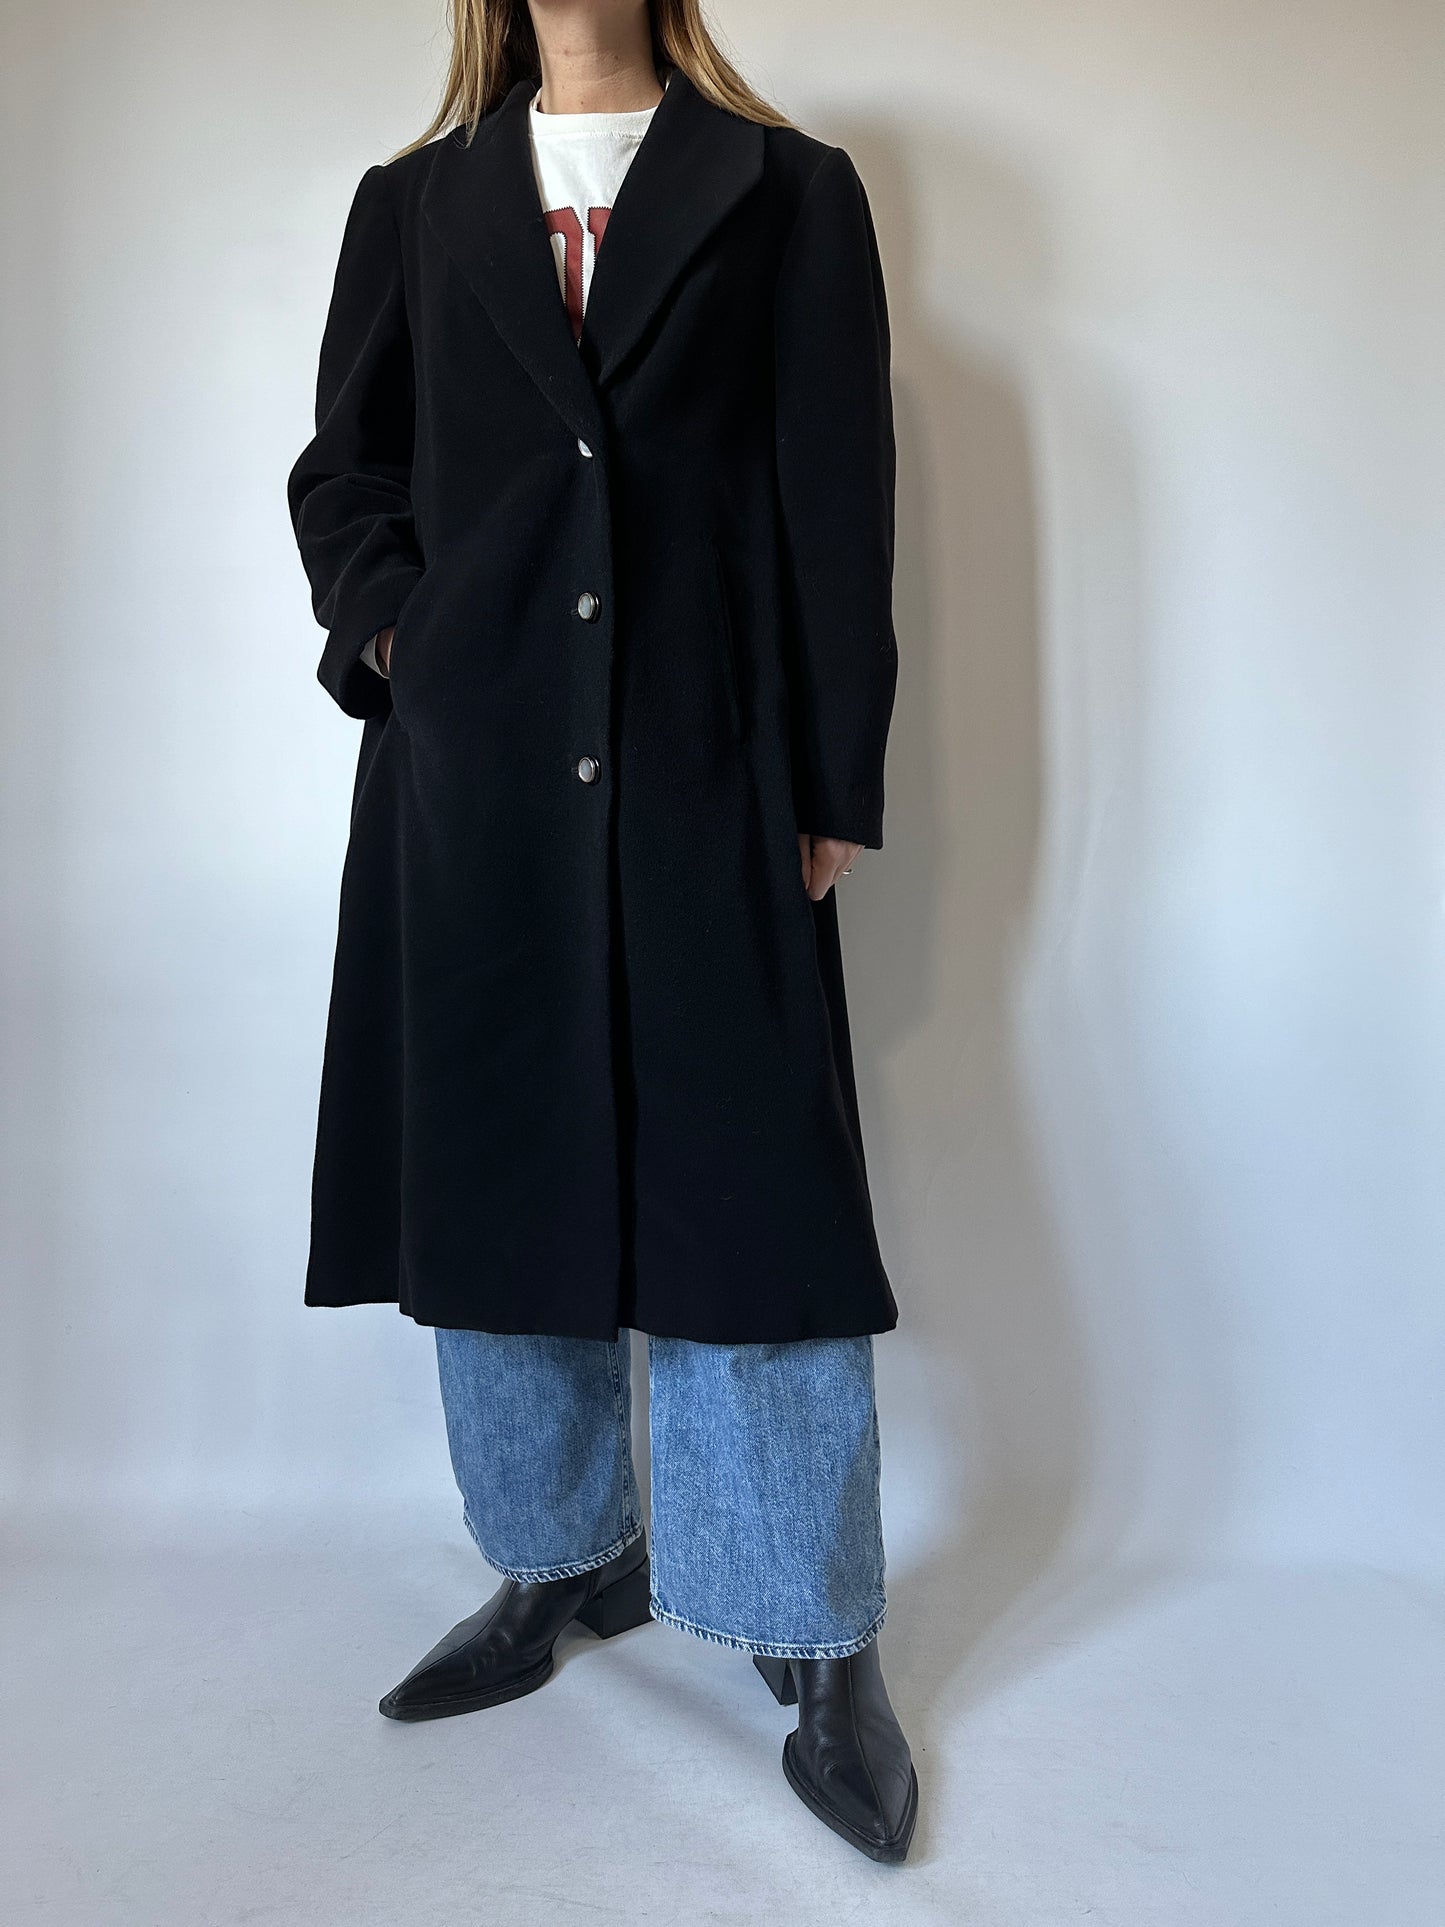 Essential black long coat